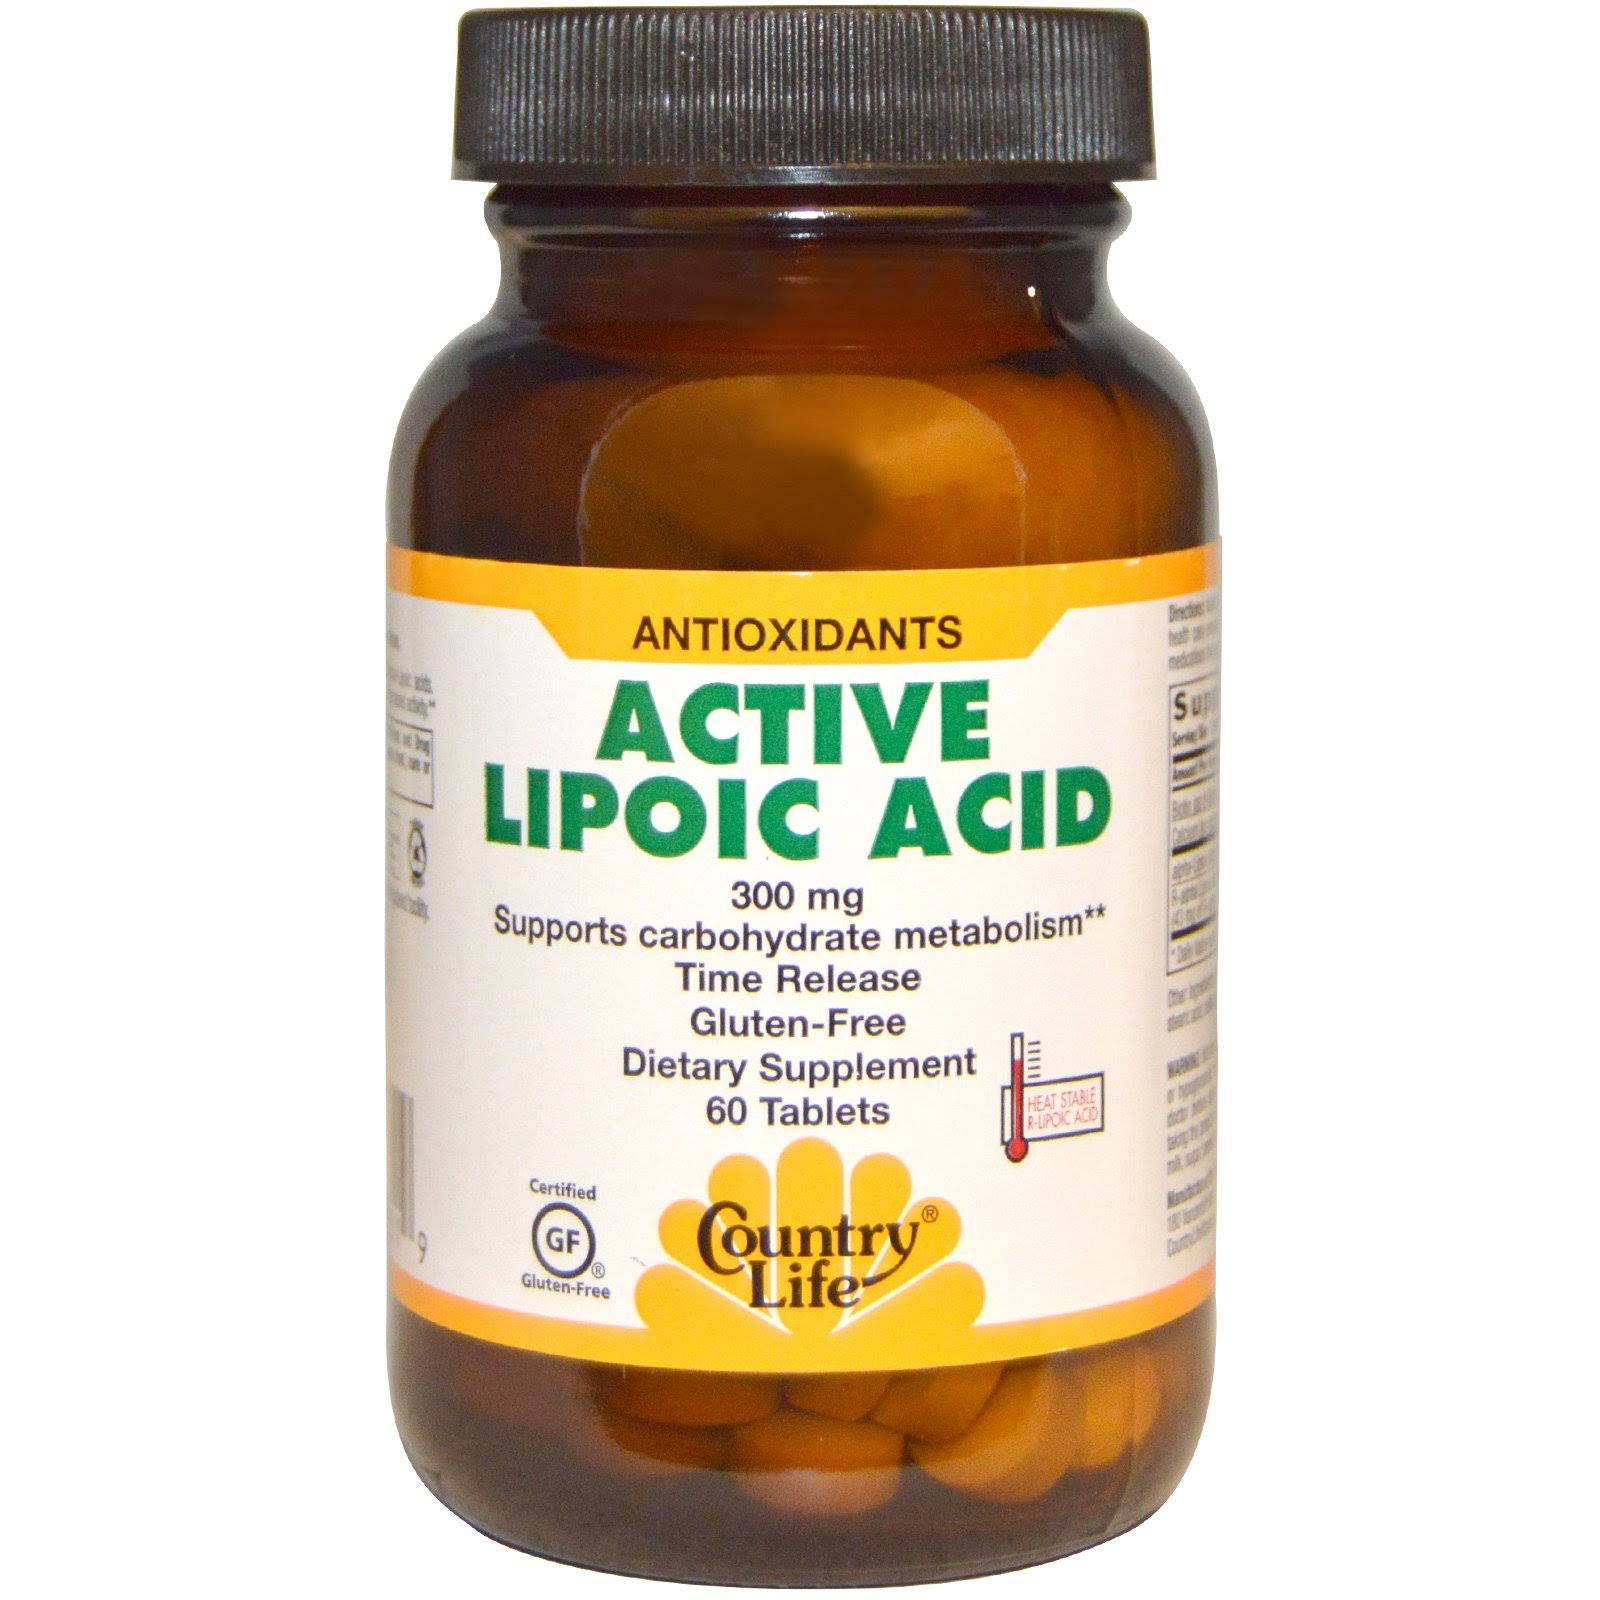 Country Life Active Lipoic Acid, 300 mg, Tablets - 60 tablets